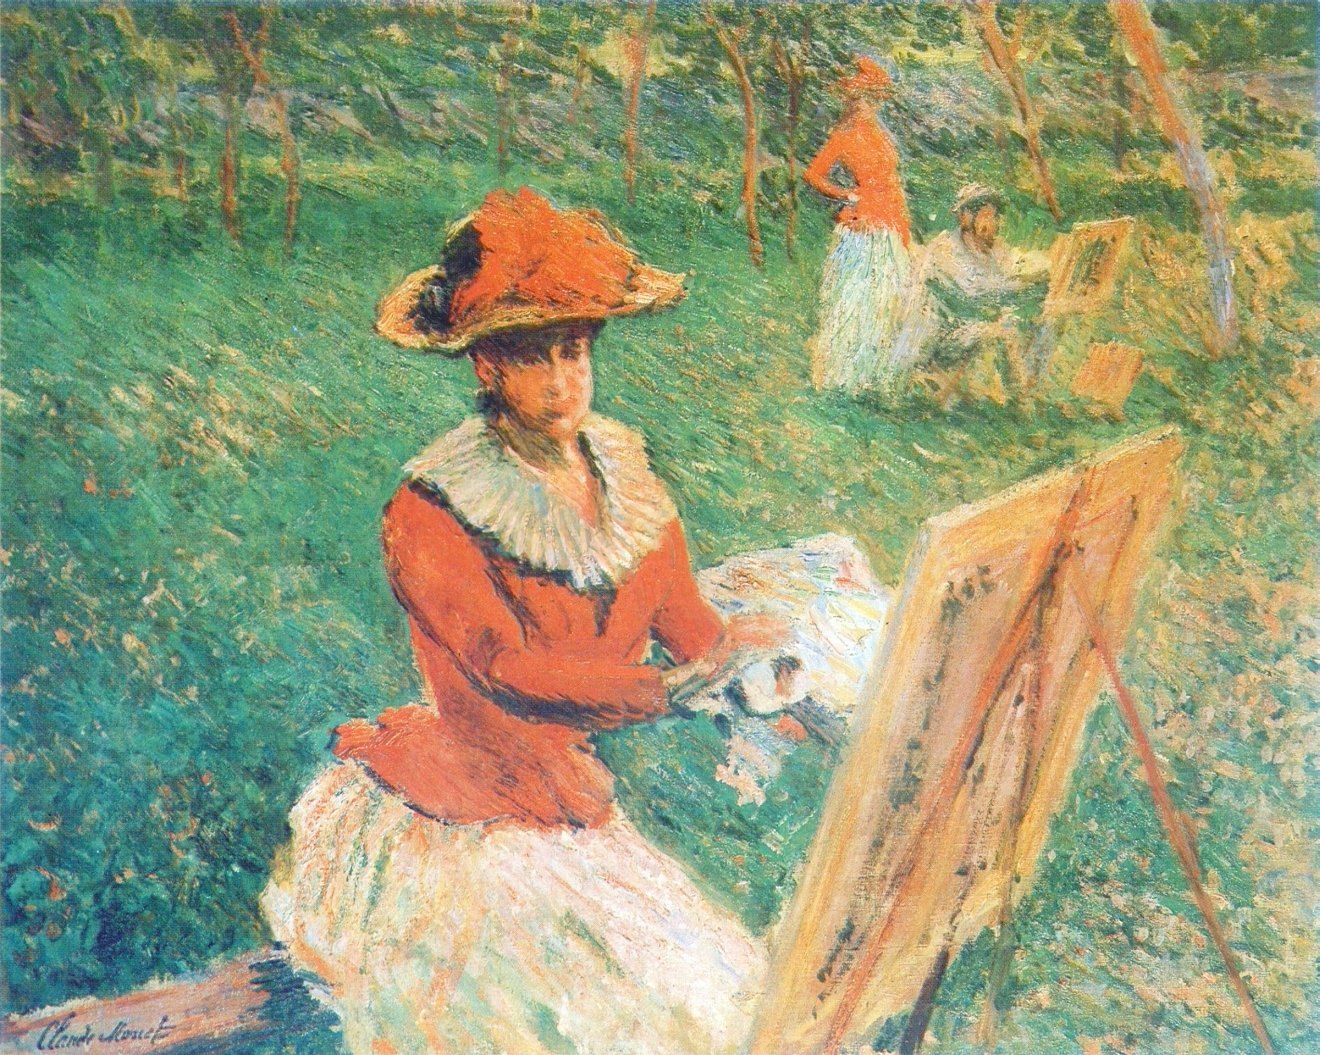 Claude+Monet-1840-1926 (138).jpg